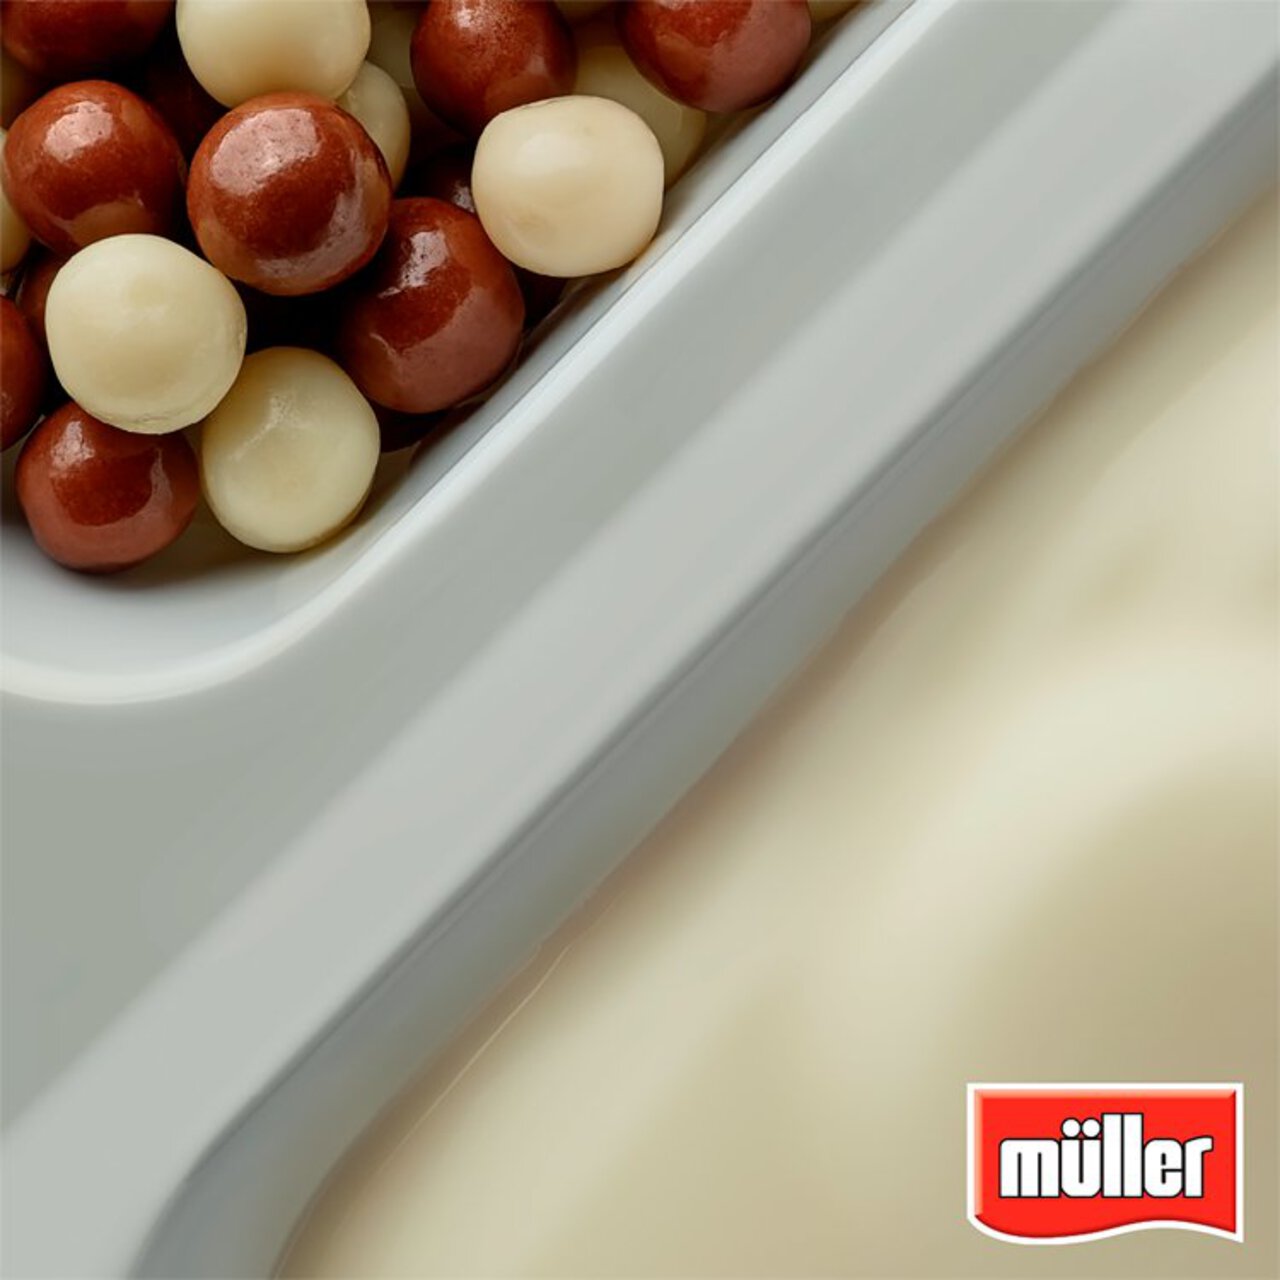 Muller Corner Vanilla Yogurt with Chocolate Digestive Biscuits 124g